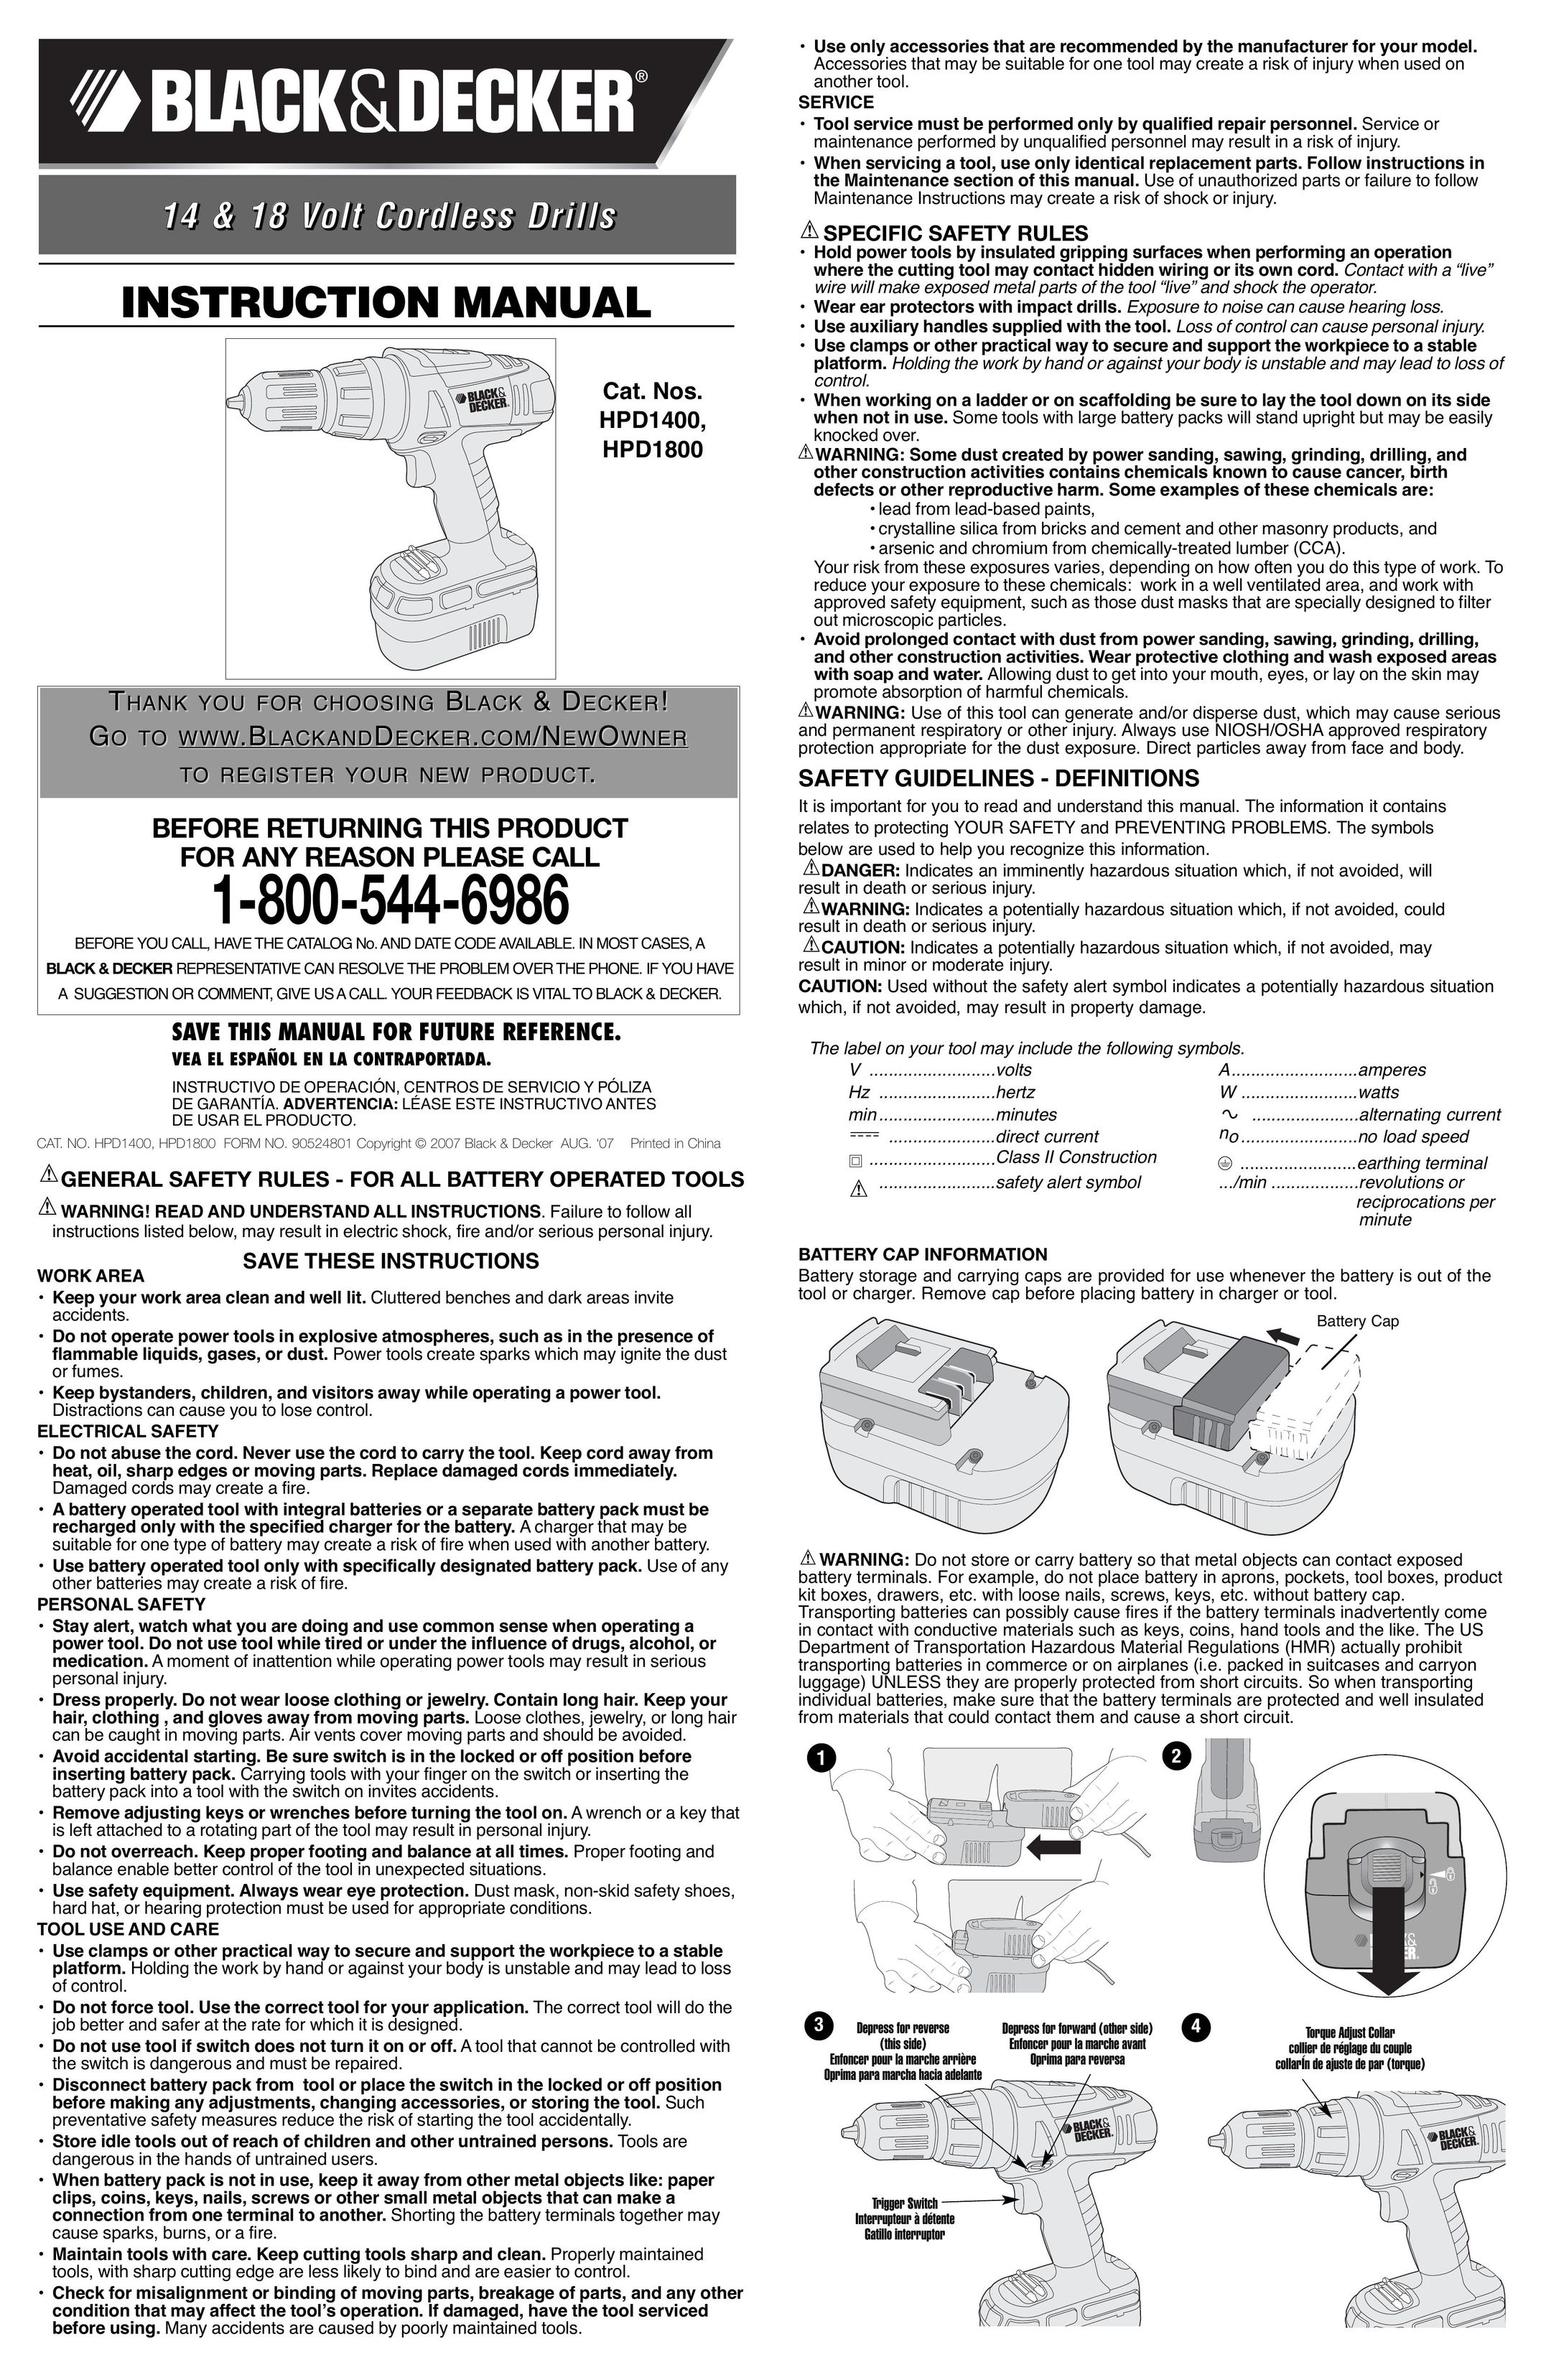 Black & Decker 90524801 Cordless Drill User Manual